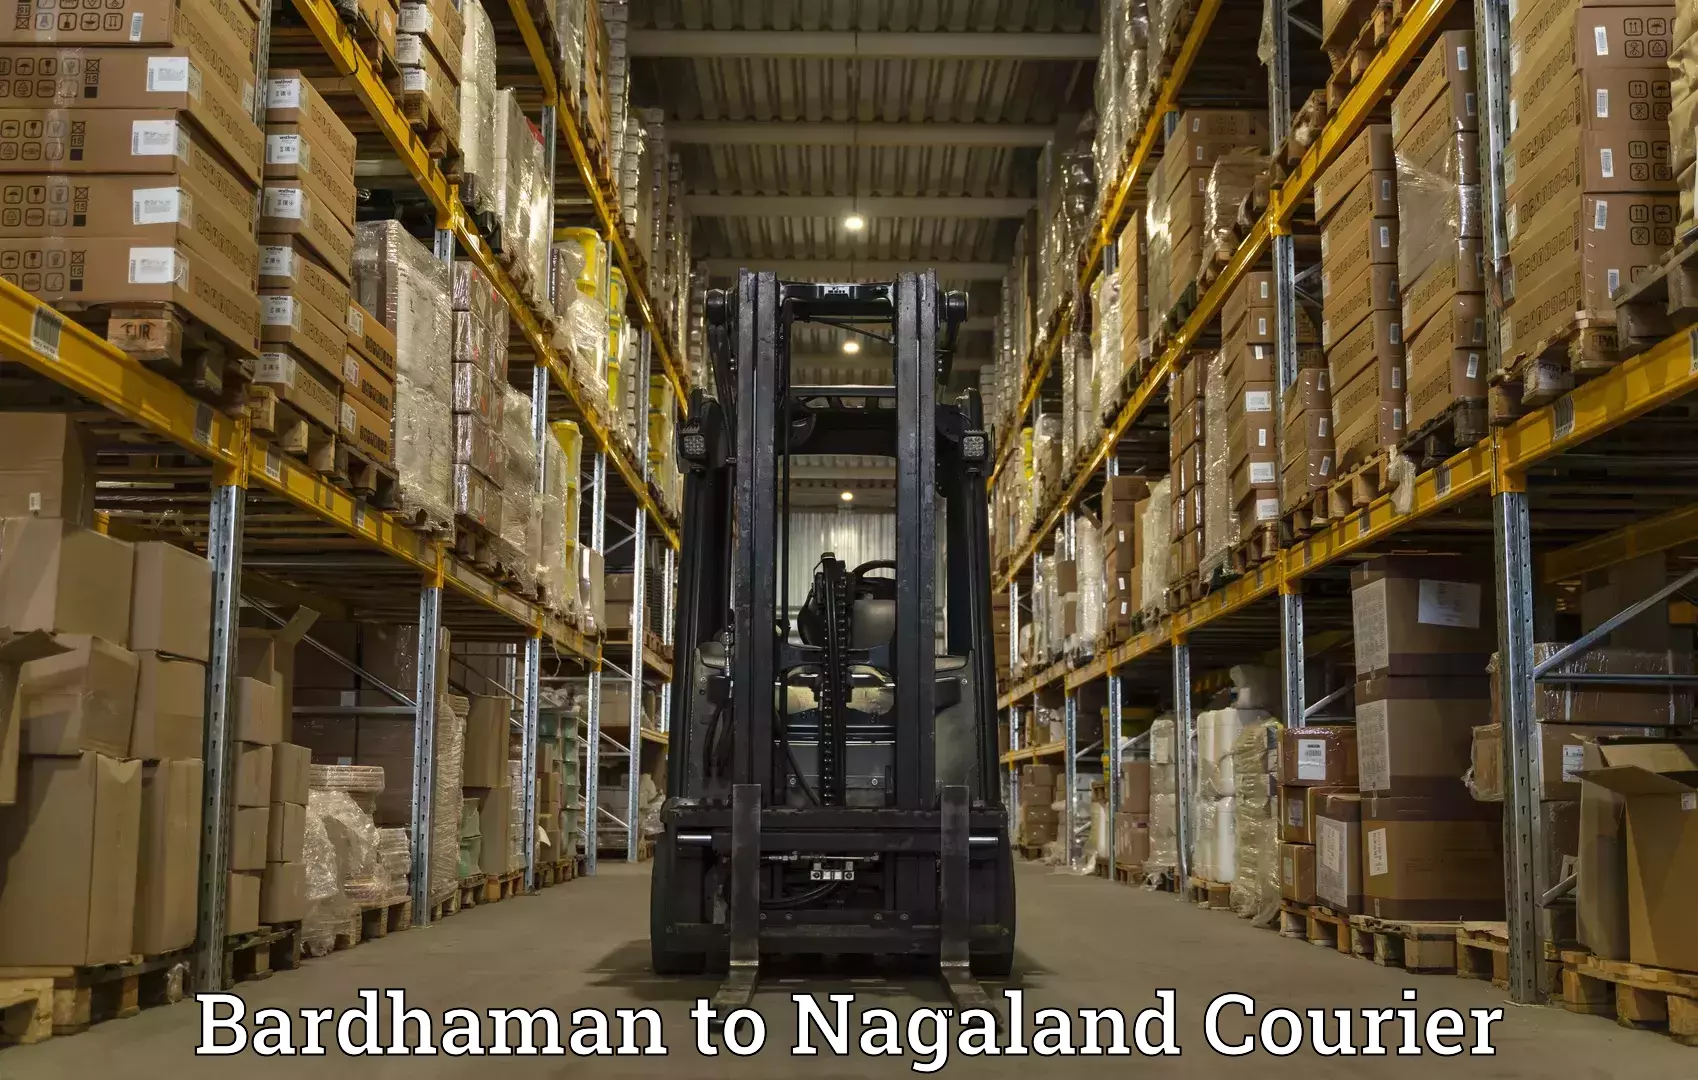 Express delivery capabilities Bardhaman to NIT Nagaland